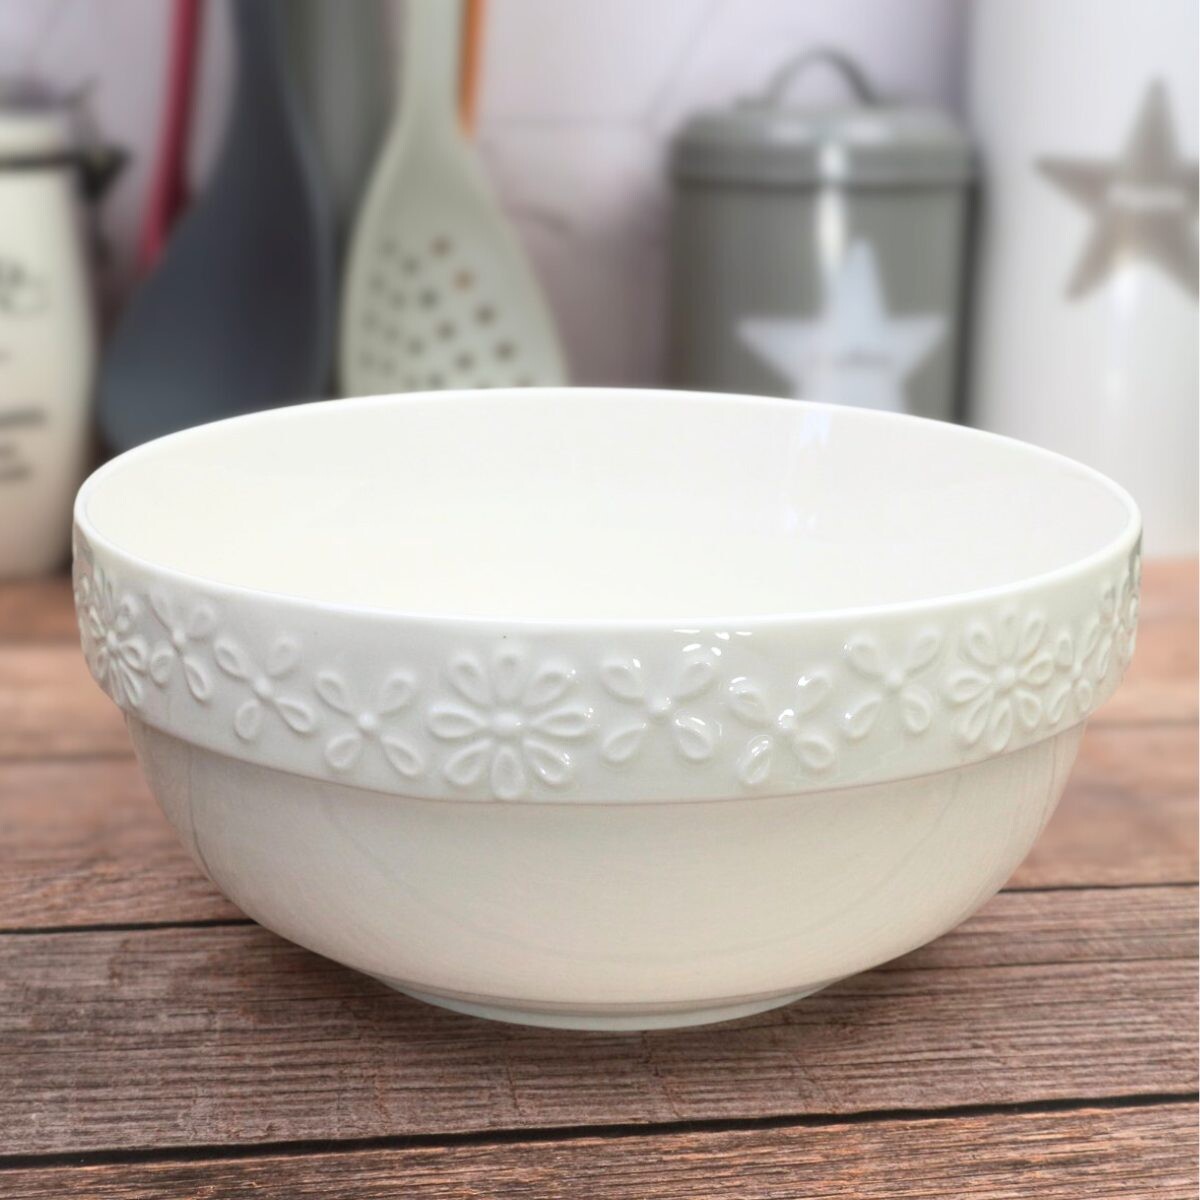 Bowl de cerámica con labrado de flores 